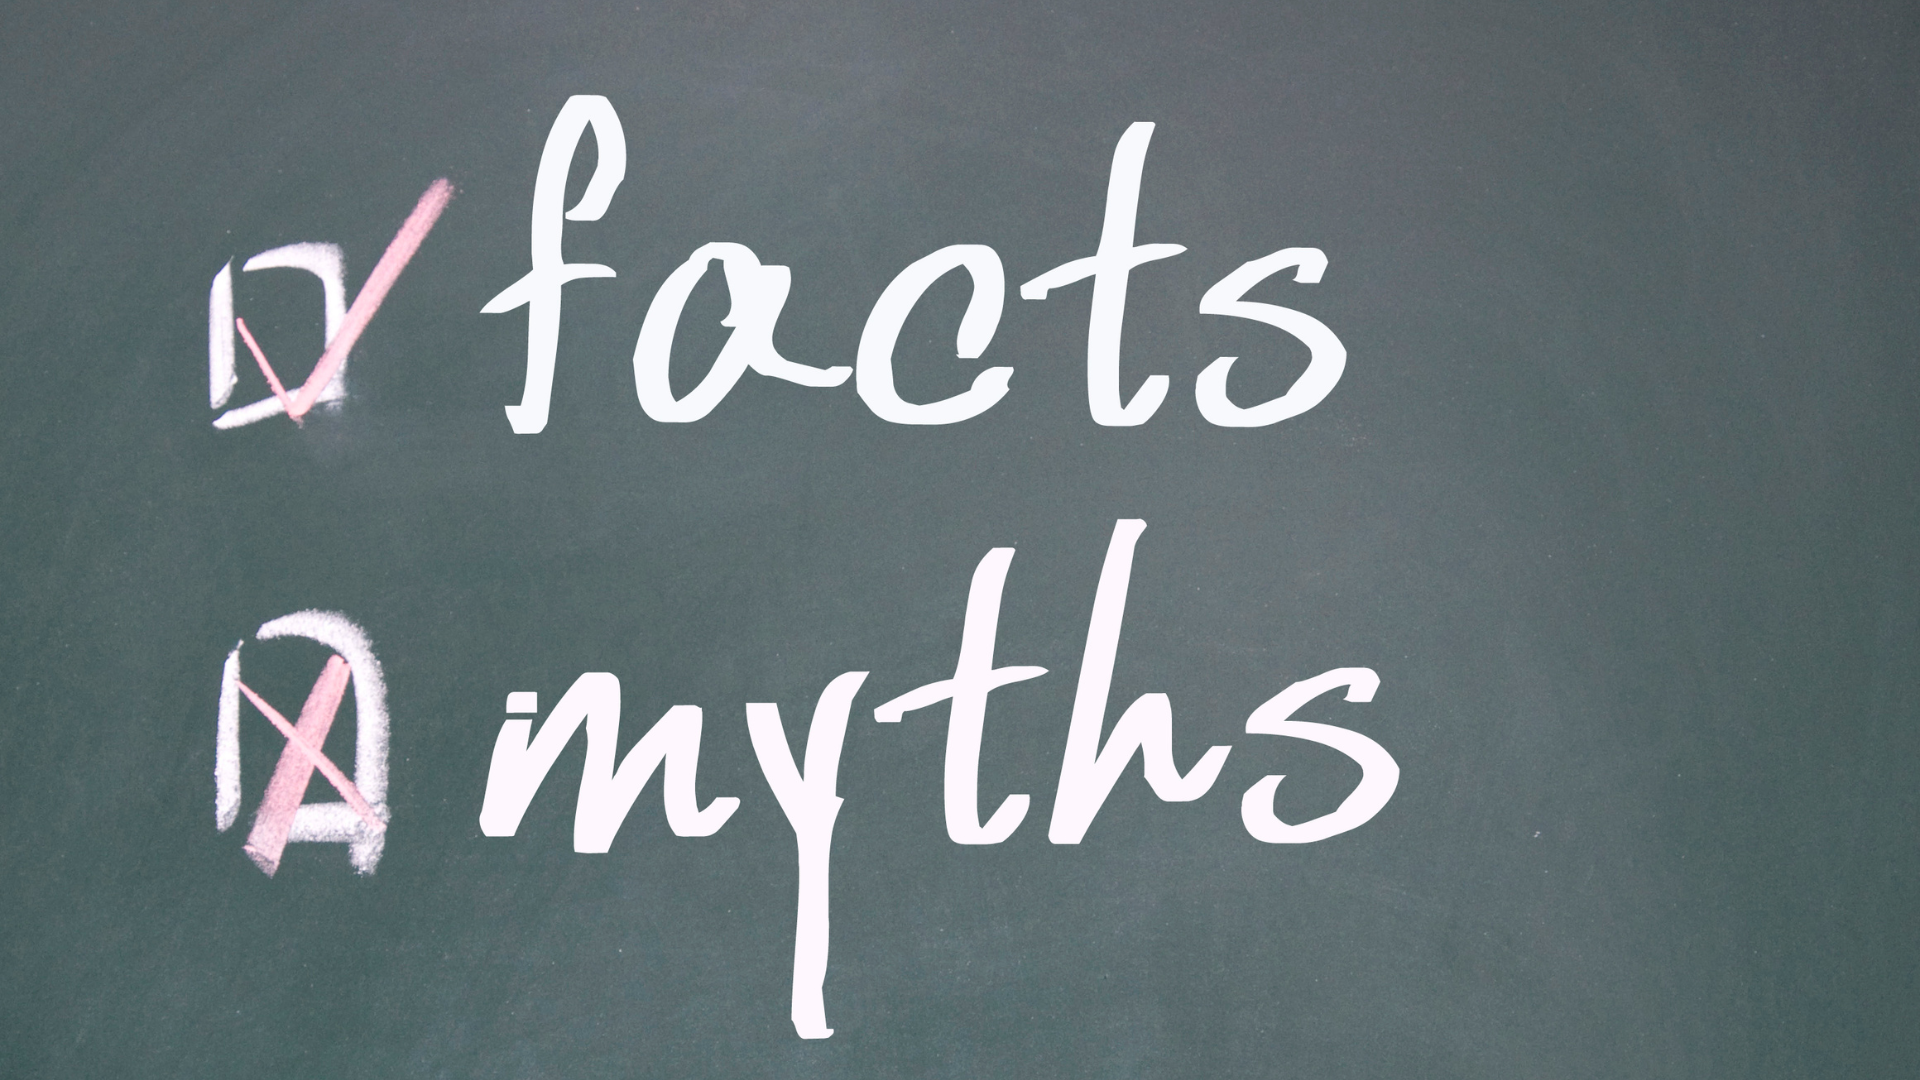 common IVA myths